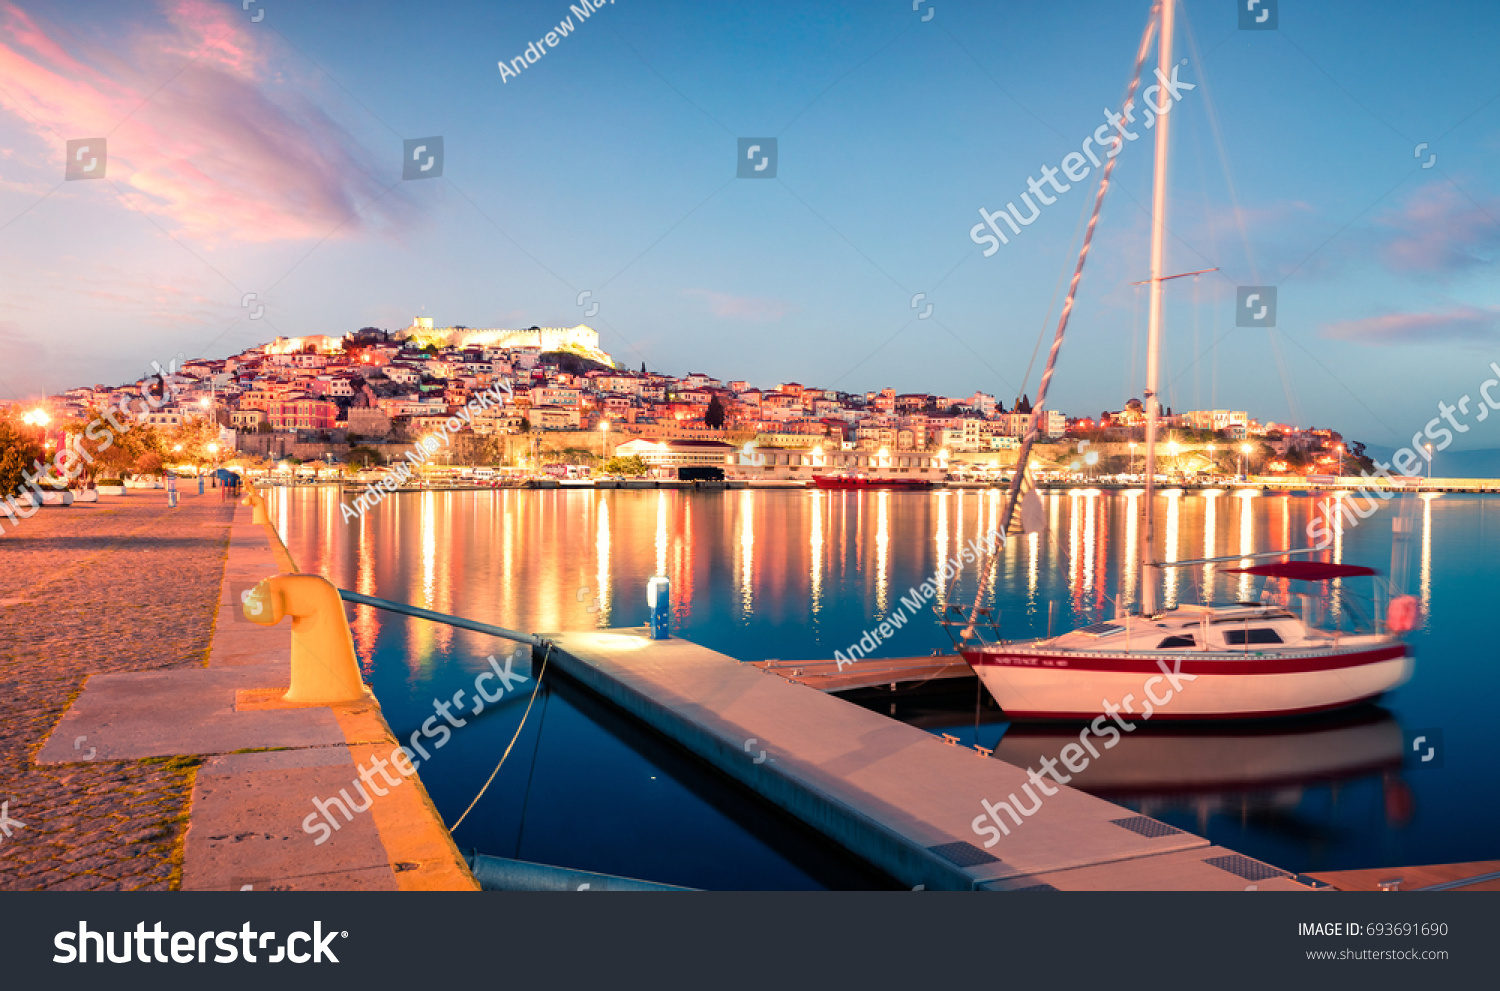 Splendid spring seascape on Aegean Sea. Colorful evening view of Kavala city, the principal seaport of eastern Macedonia and the capital of Kavala regional unit. Greece, Europe. #693691690